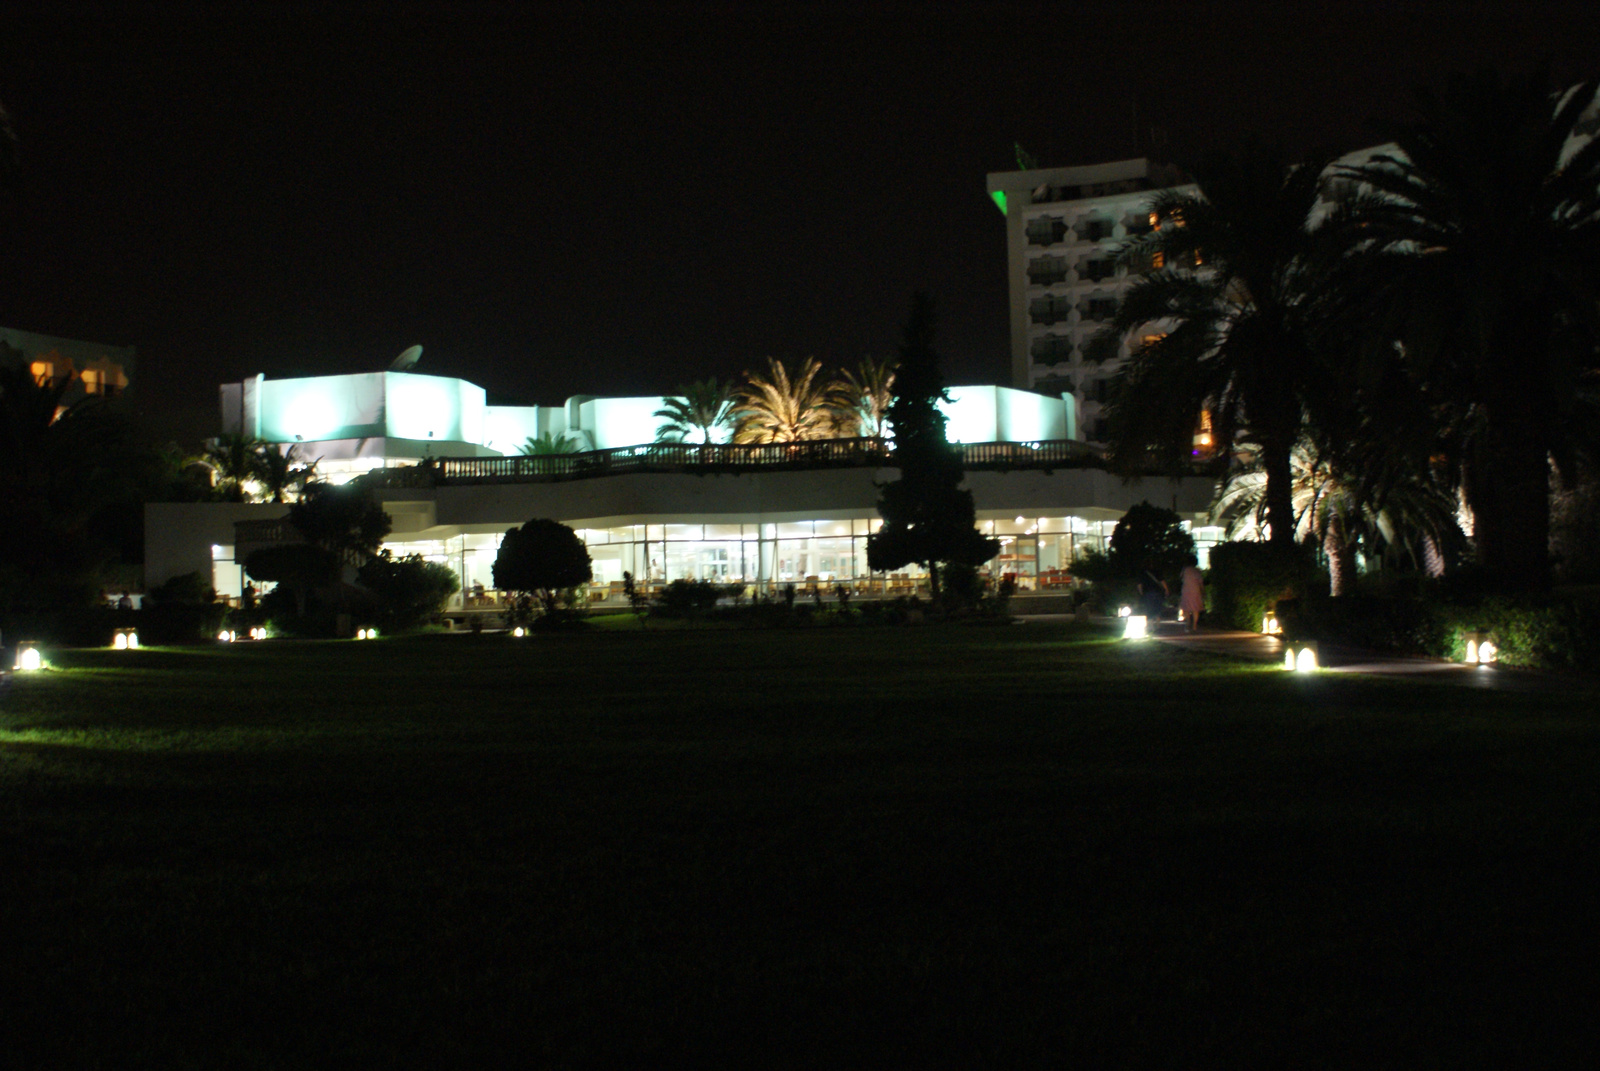 Sousse, Hotel Tour Khalef Kert